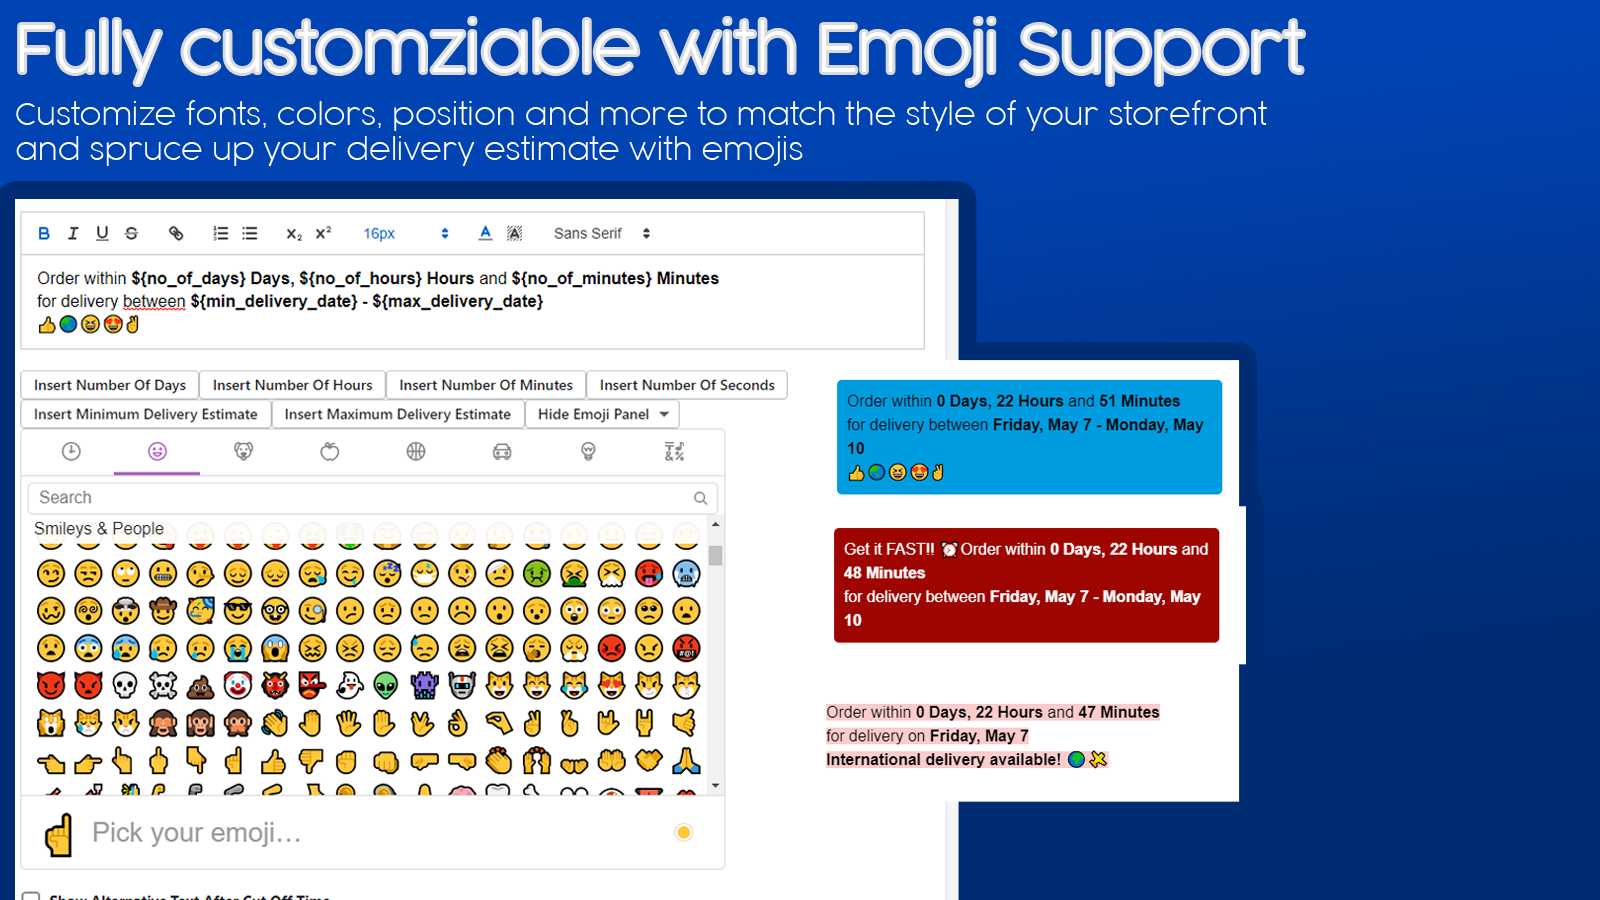 Full customization with emoji support.